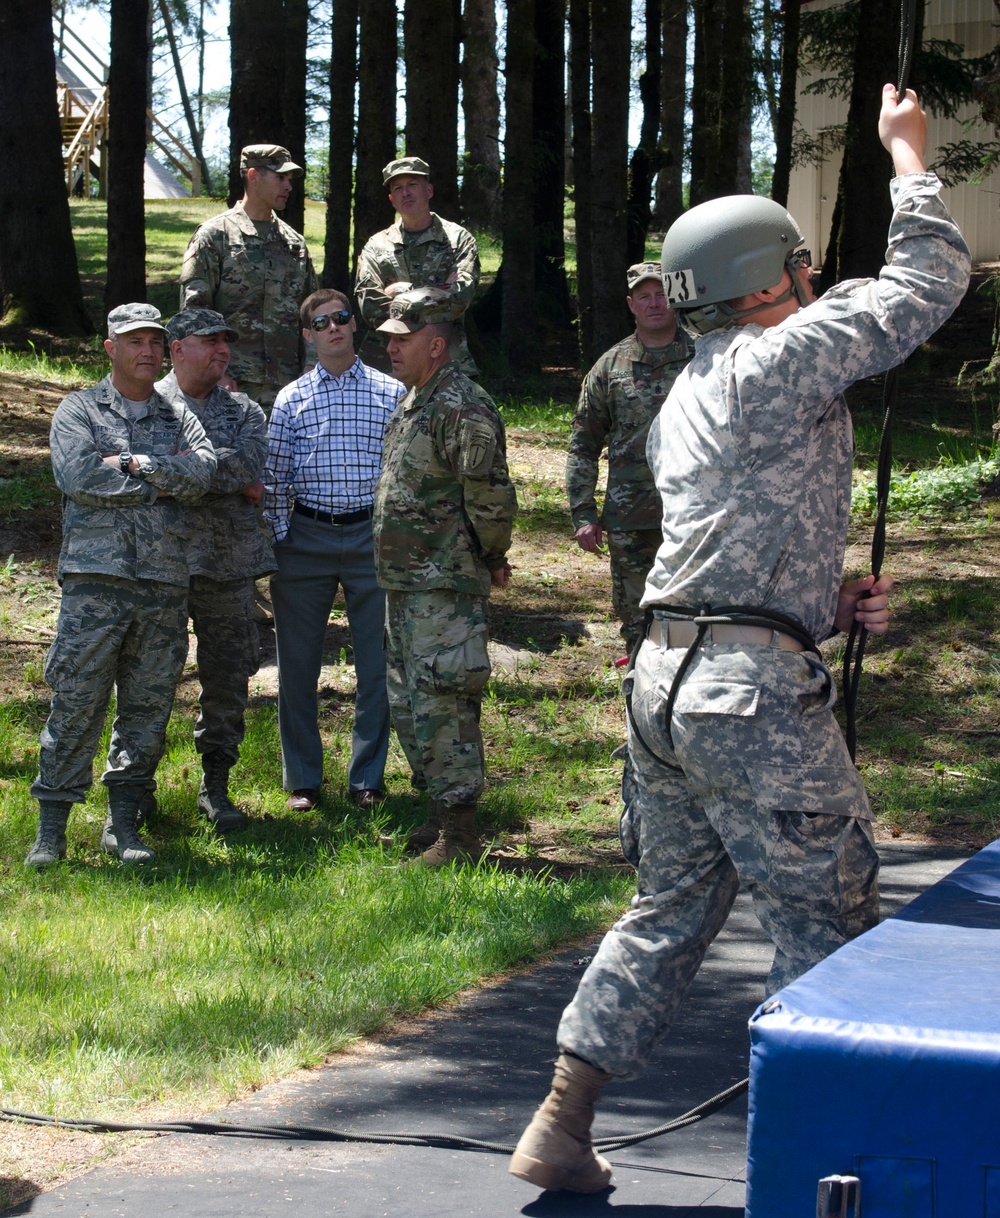 Oregon's military leaders observe Air Assault students